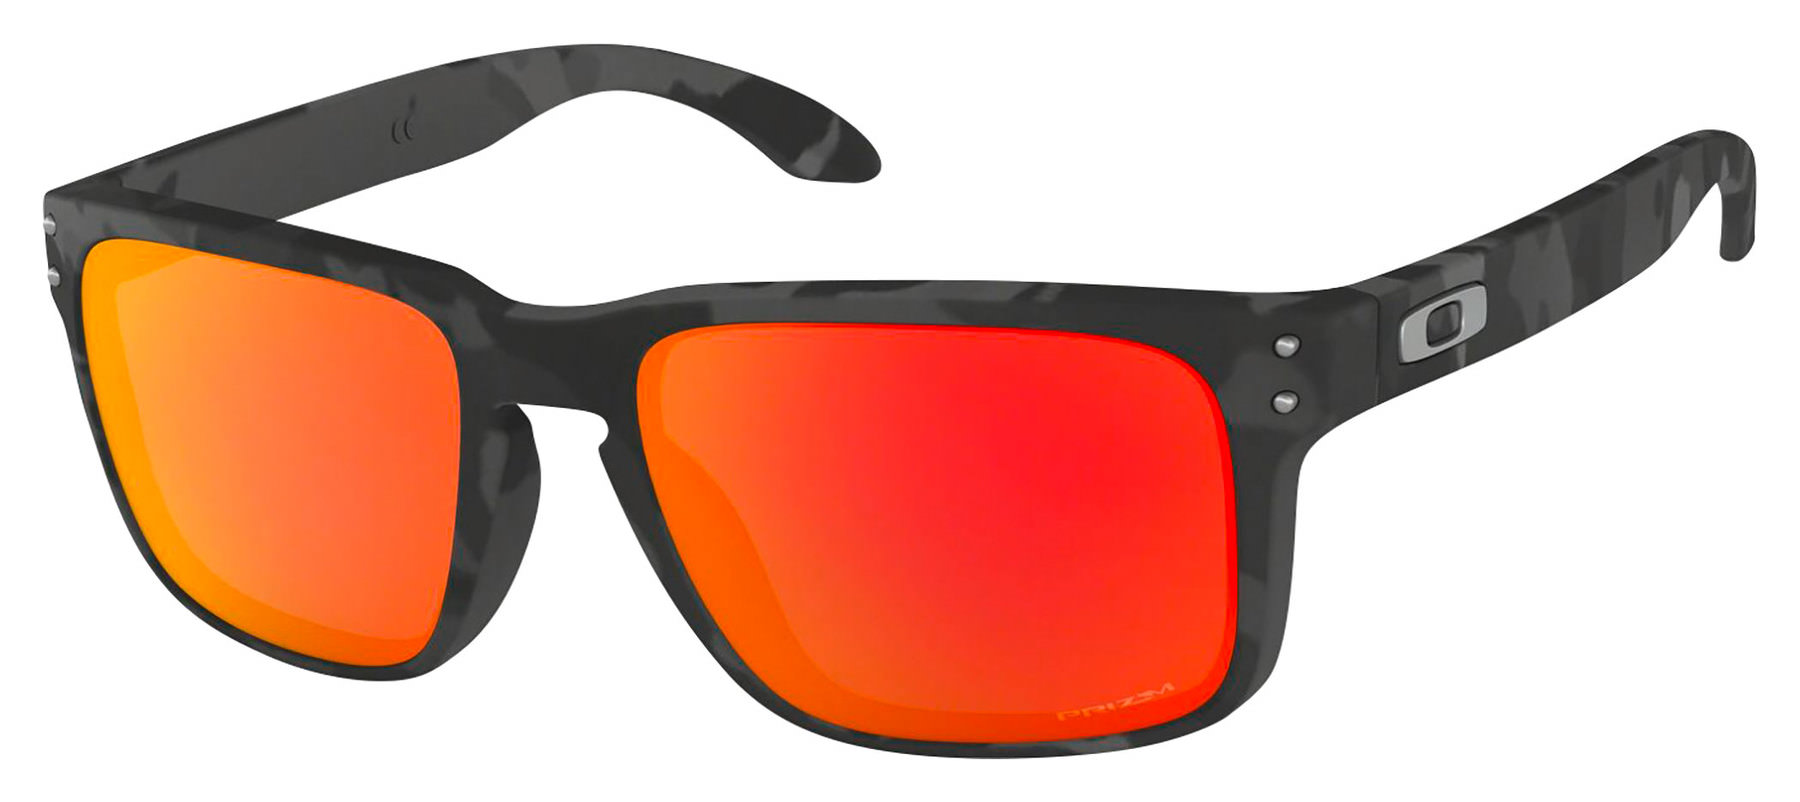 holbrook sunglasses cheap